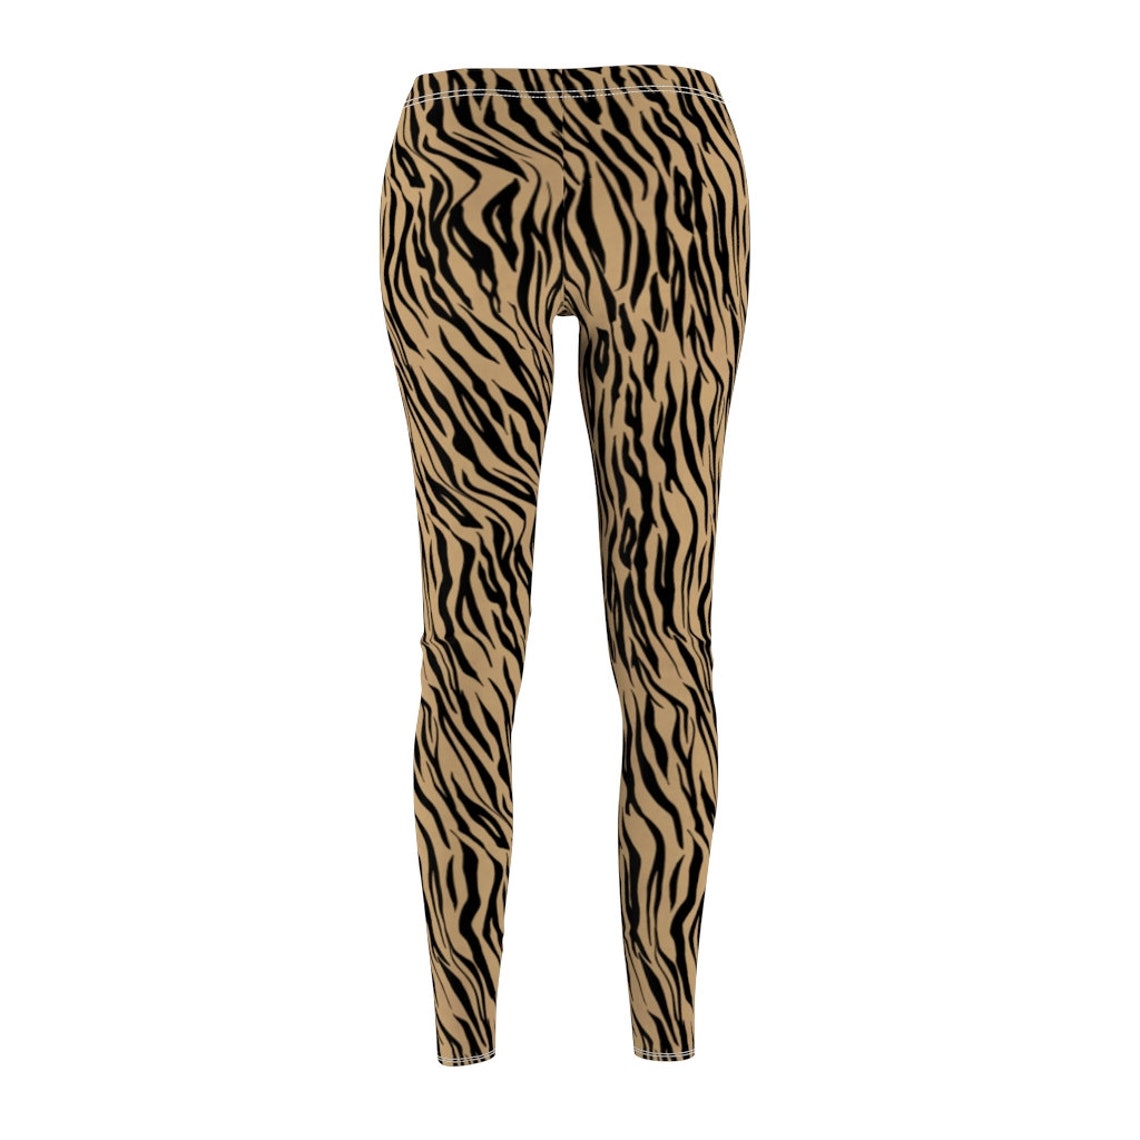 Zebra Stripe Leggings Zebra Stretch Pants Animal Print | Etsy